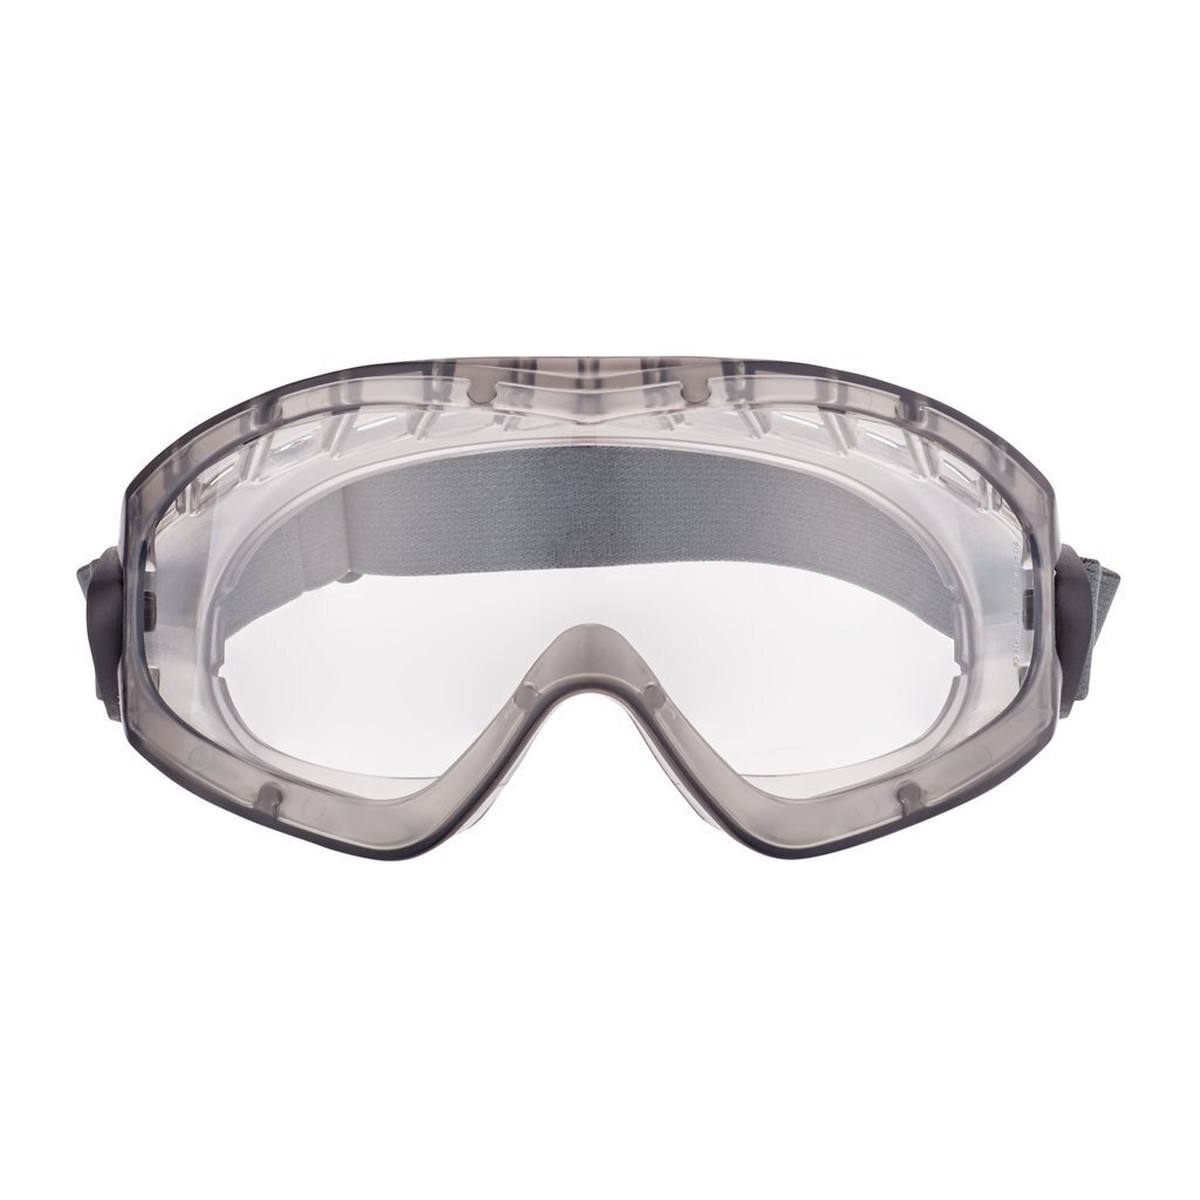 3M 2891-SGAF Full-vision bril, met ventilatiesleuf, verstelbare scharnieren, anticondenscoating